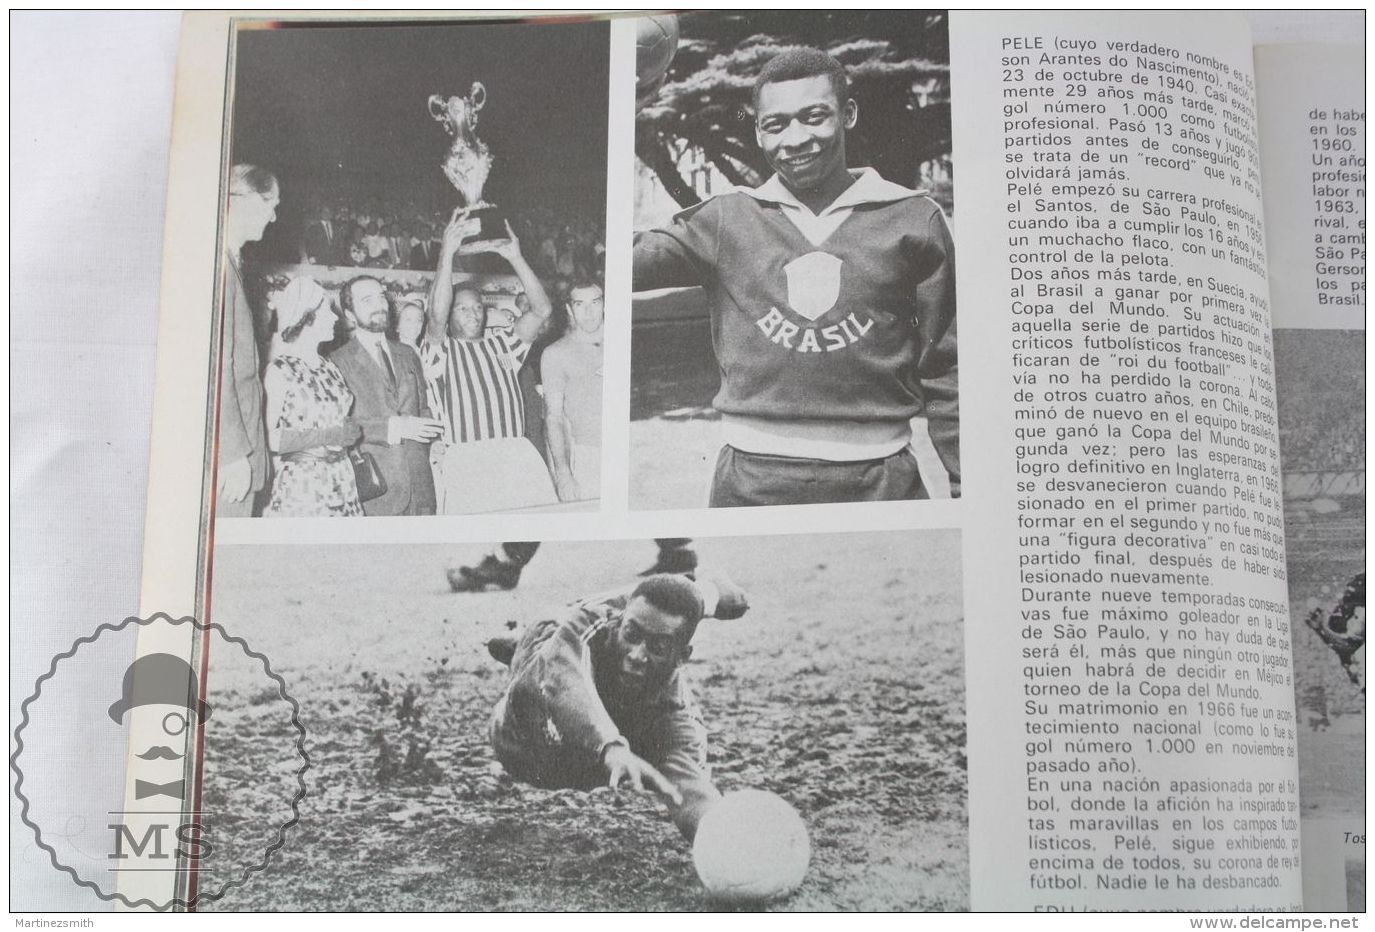 Vintage Mexico 1970 FIFA World Cup Magazine By Ladislao Kubala - Pele Images - Andere & Zonder Classificatie